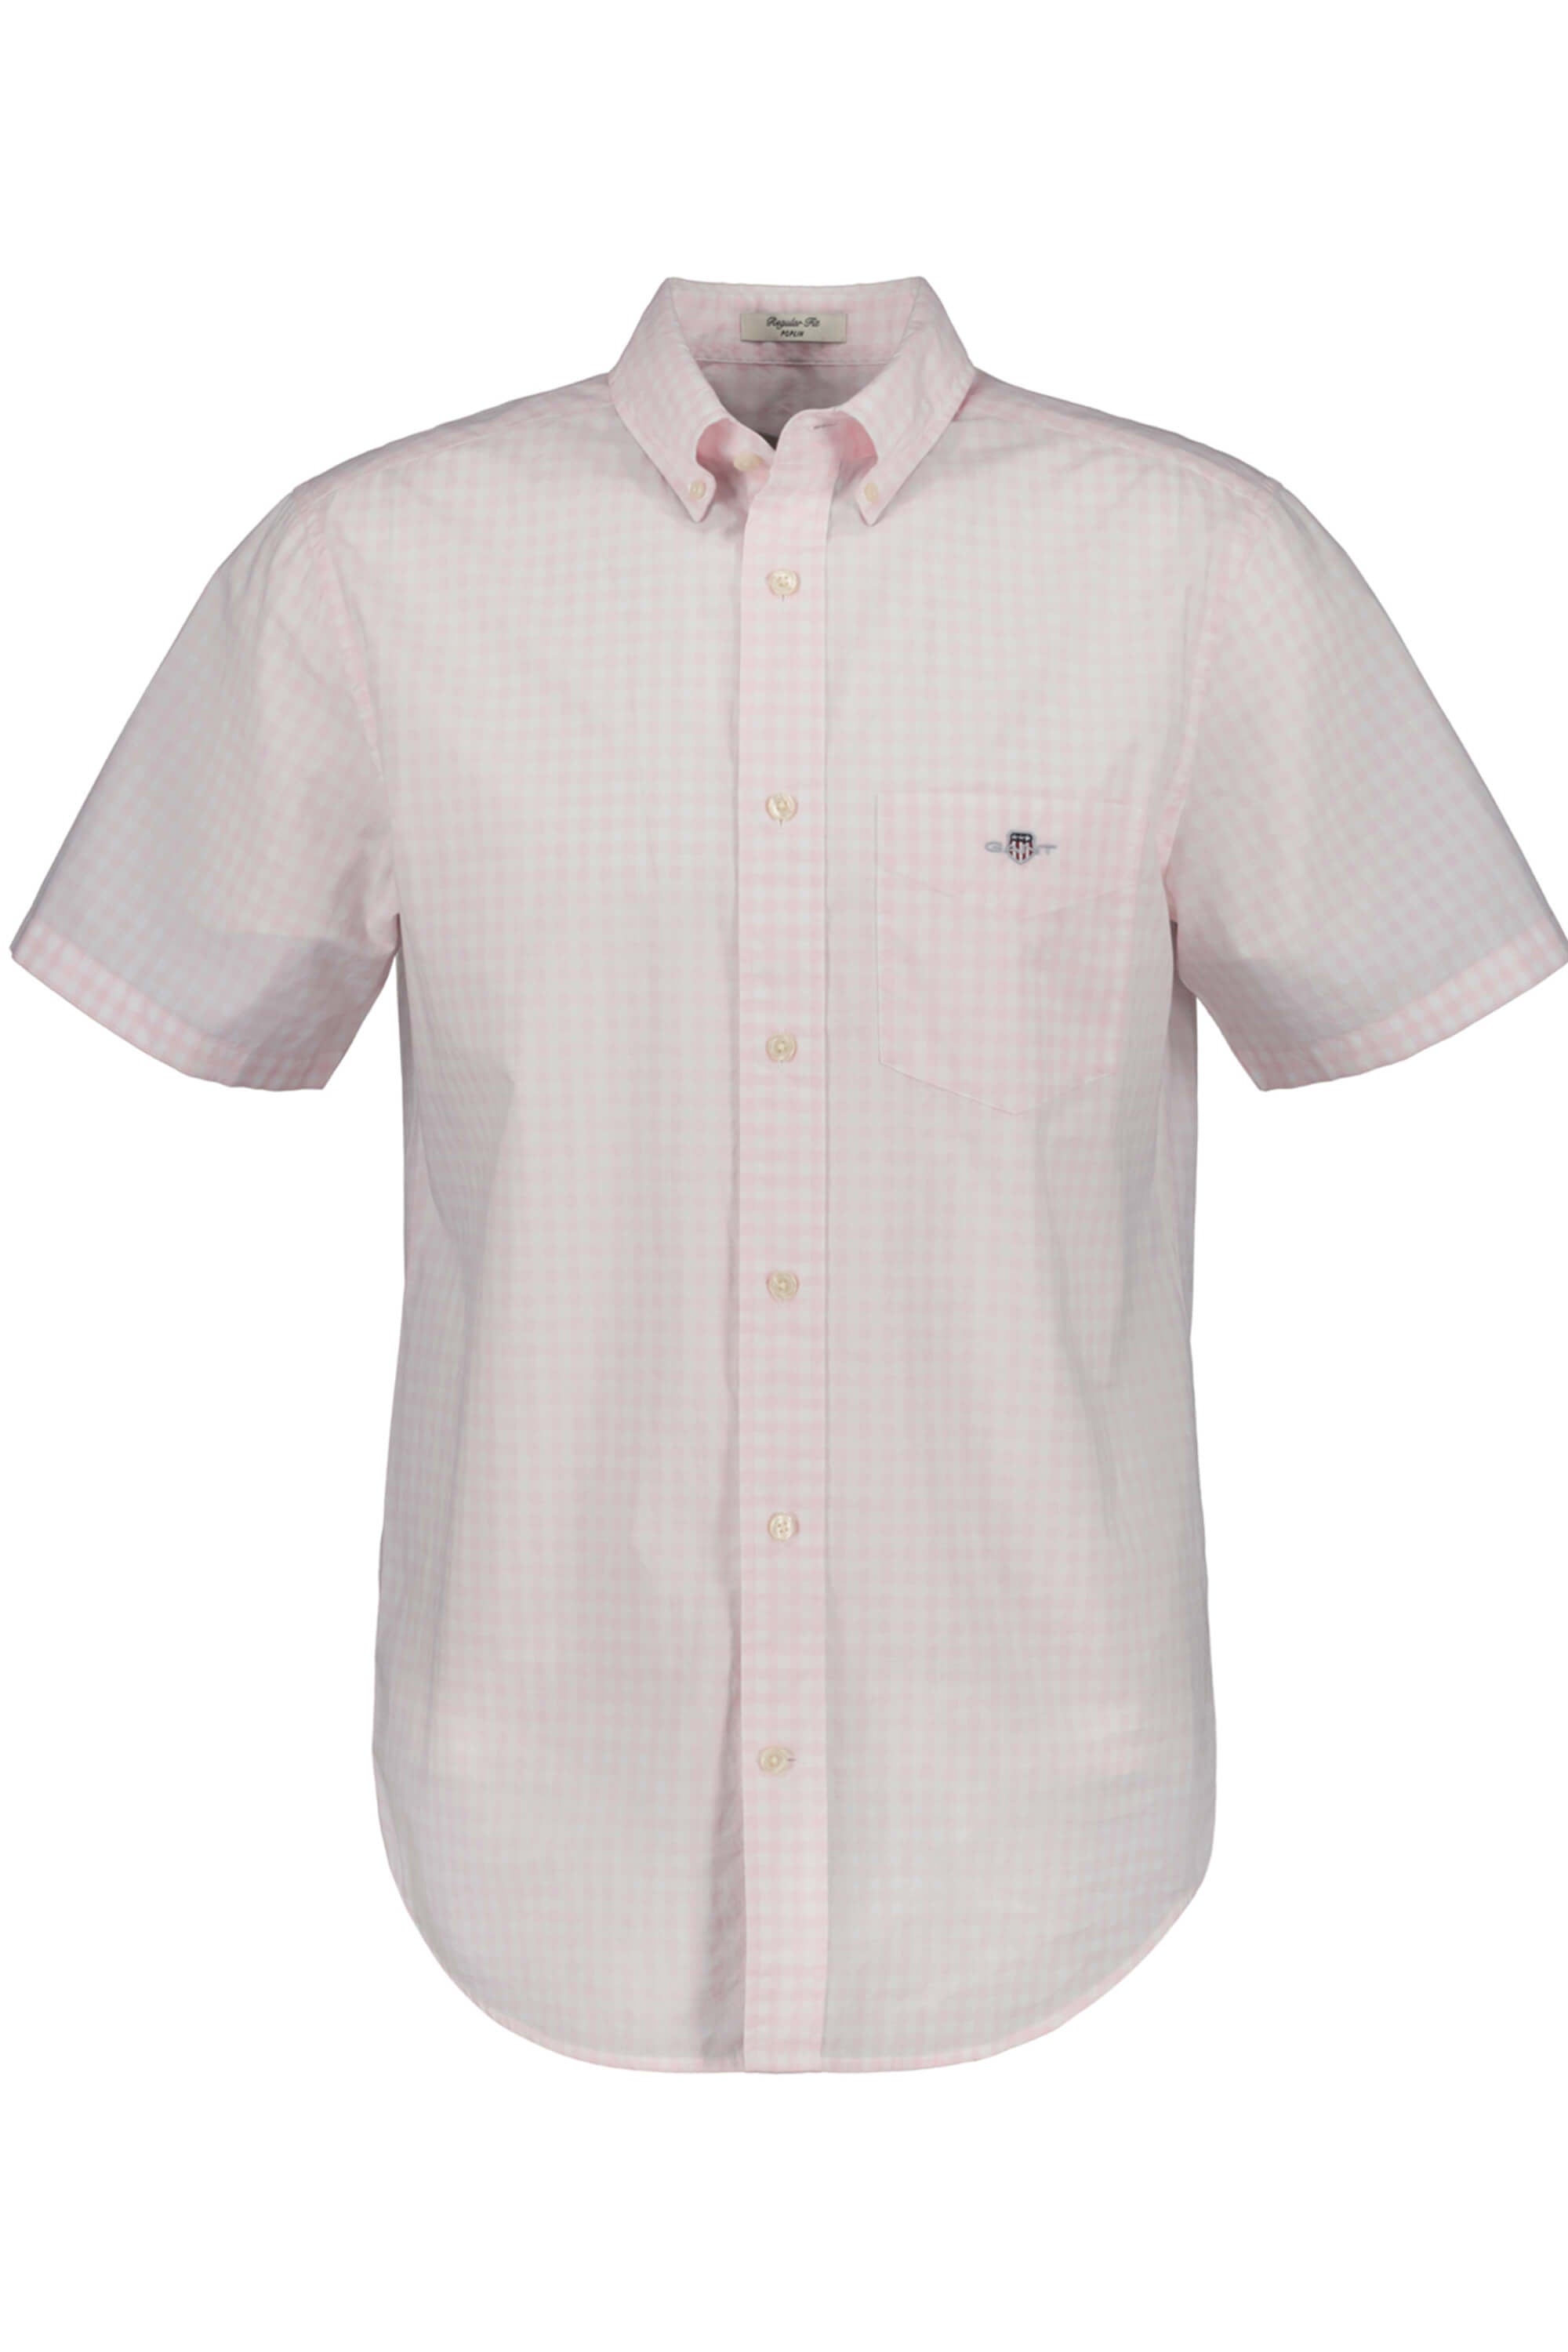 Gant Poplin Gingham Shirt Light Pink